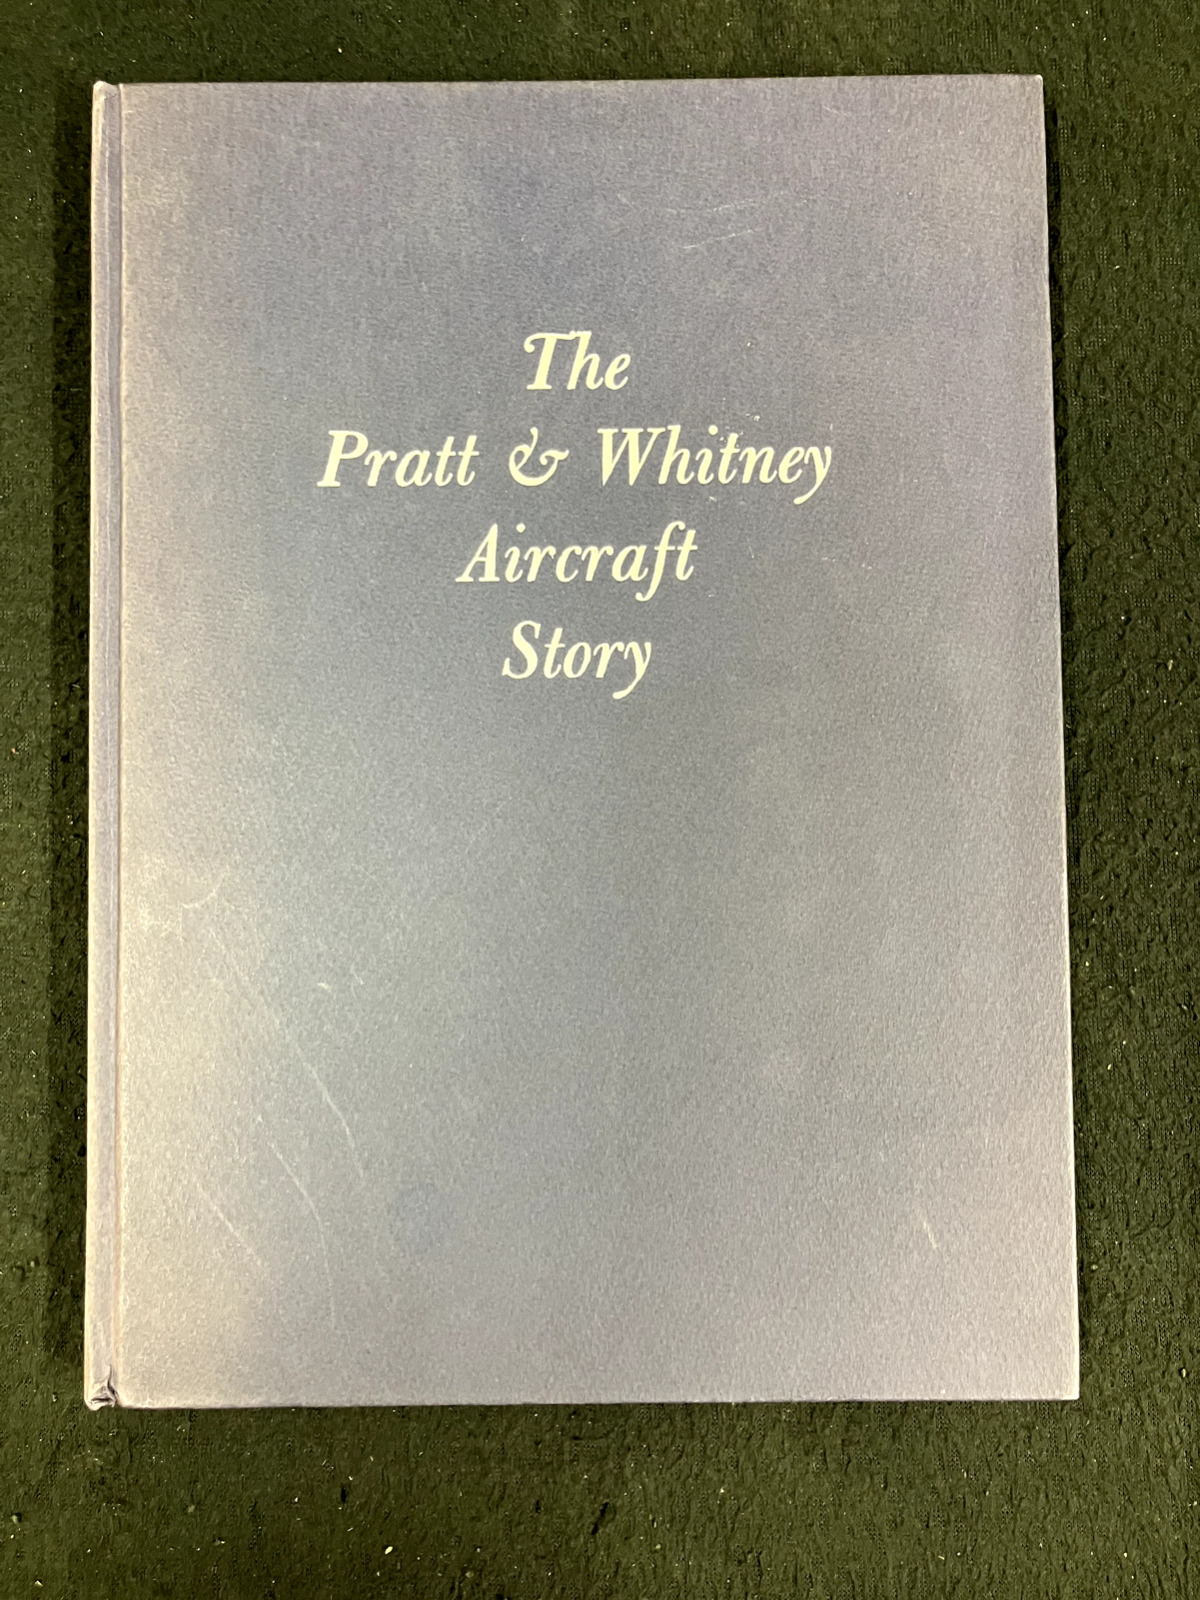 THE PRATT & WHITNEY AIRCRAFT STORY, 1950, HARDCOVER, 1ST EDITION